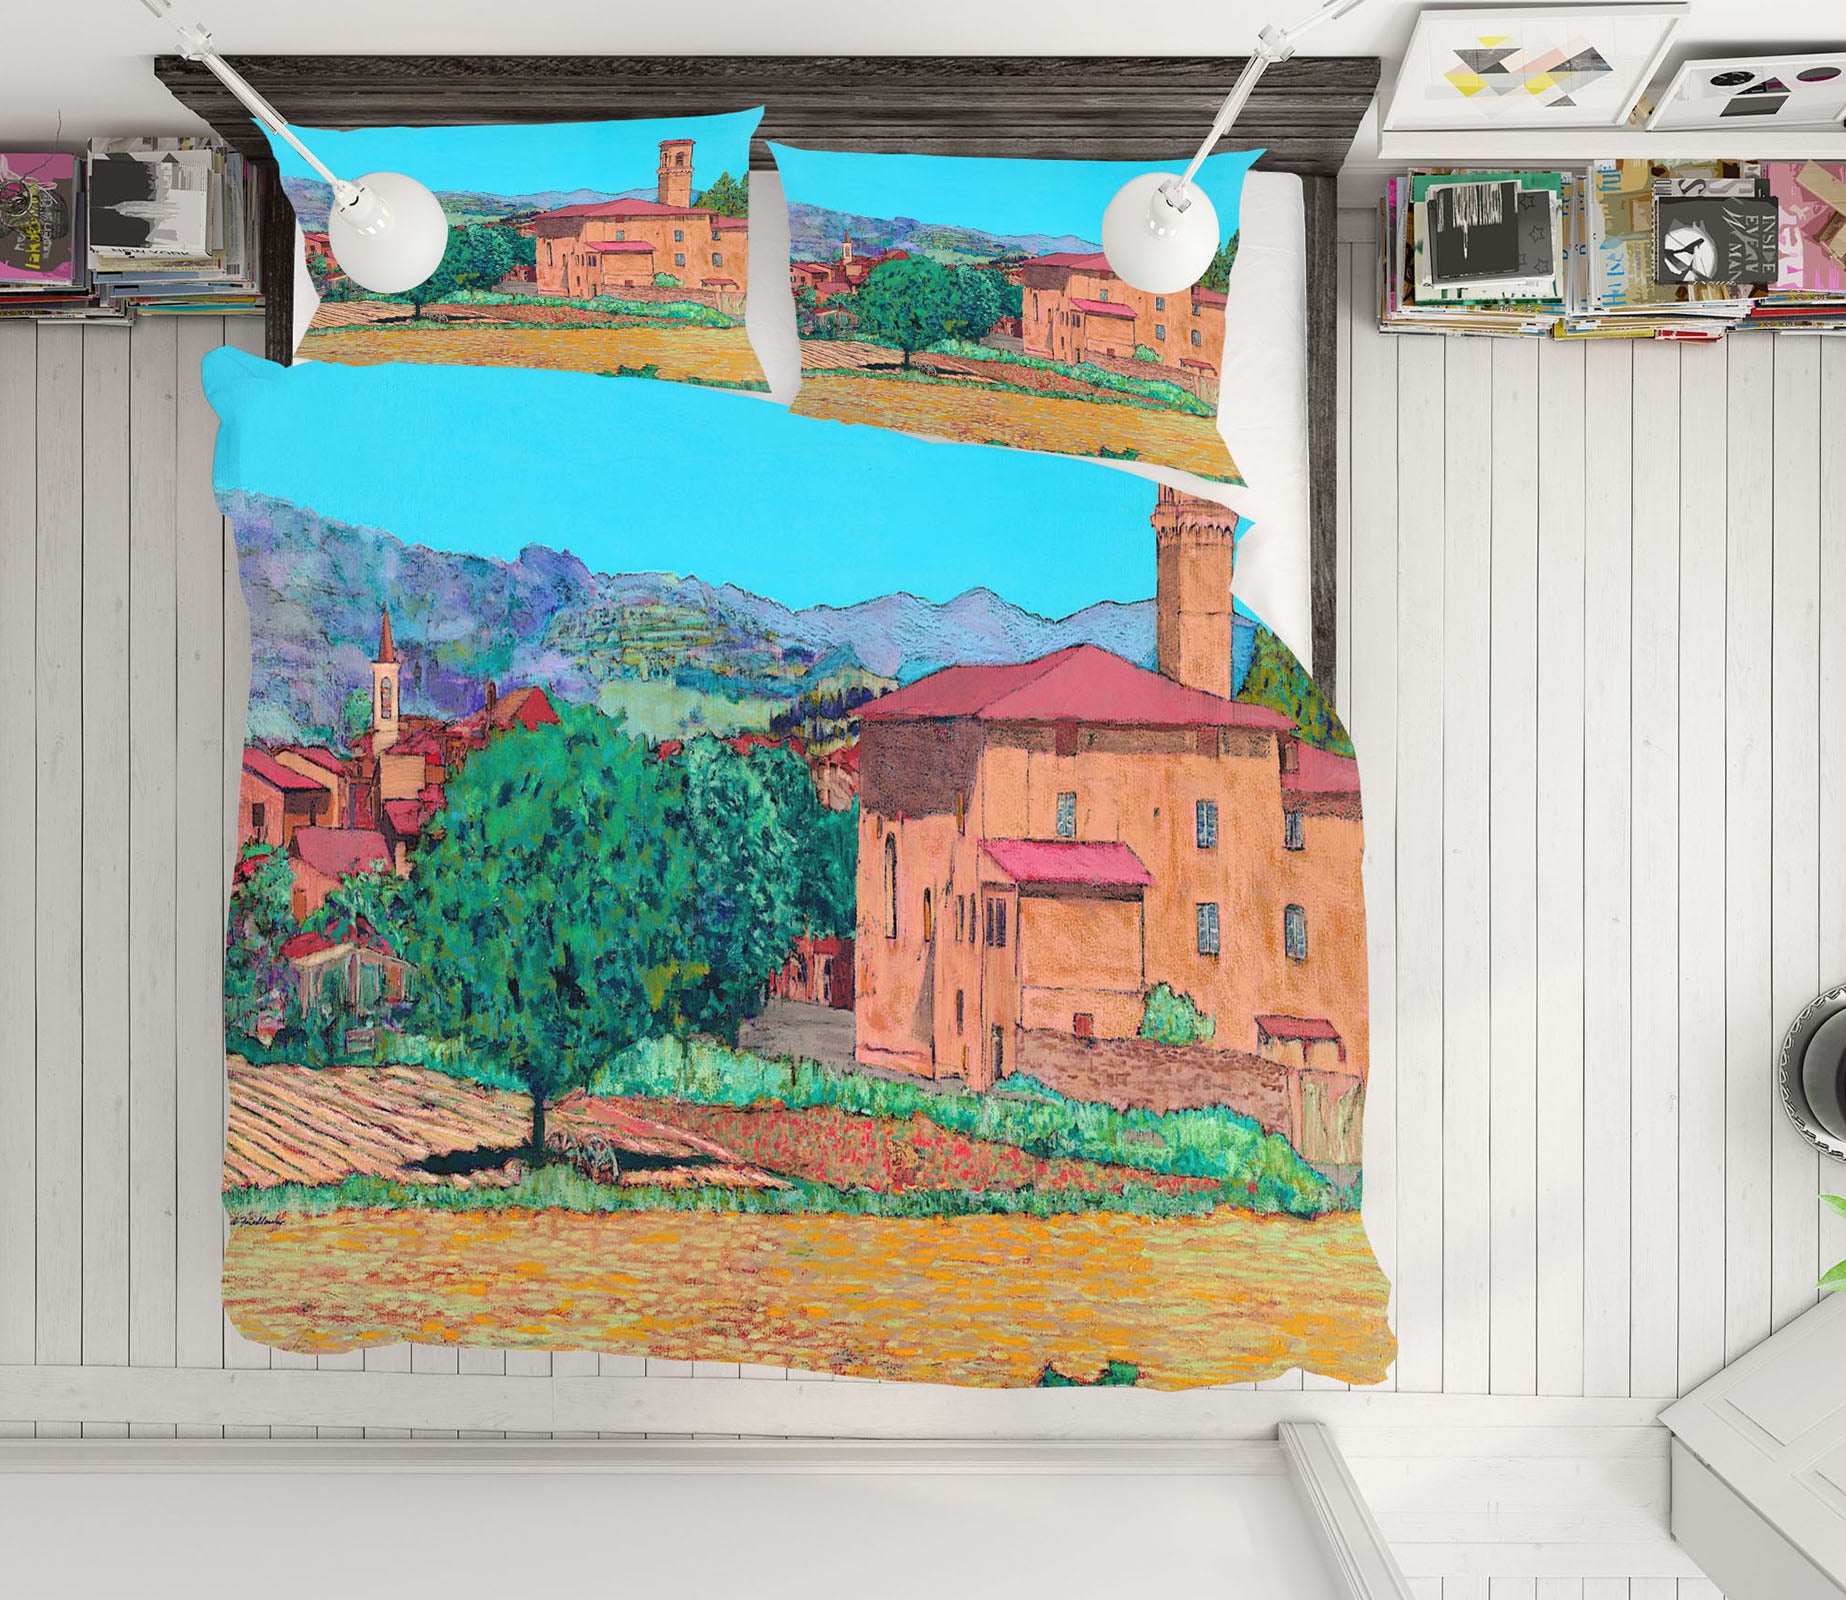 3D Tuscan Farm Village 1177 Allan P. Friedlander Bedding Bed Pillowcases Quilt